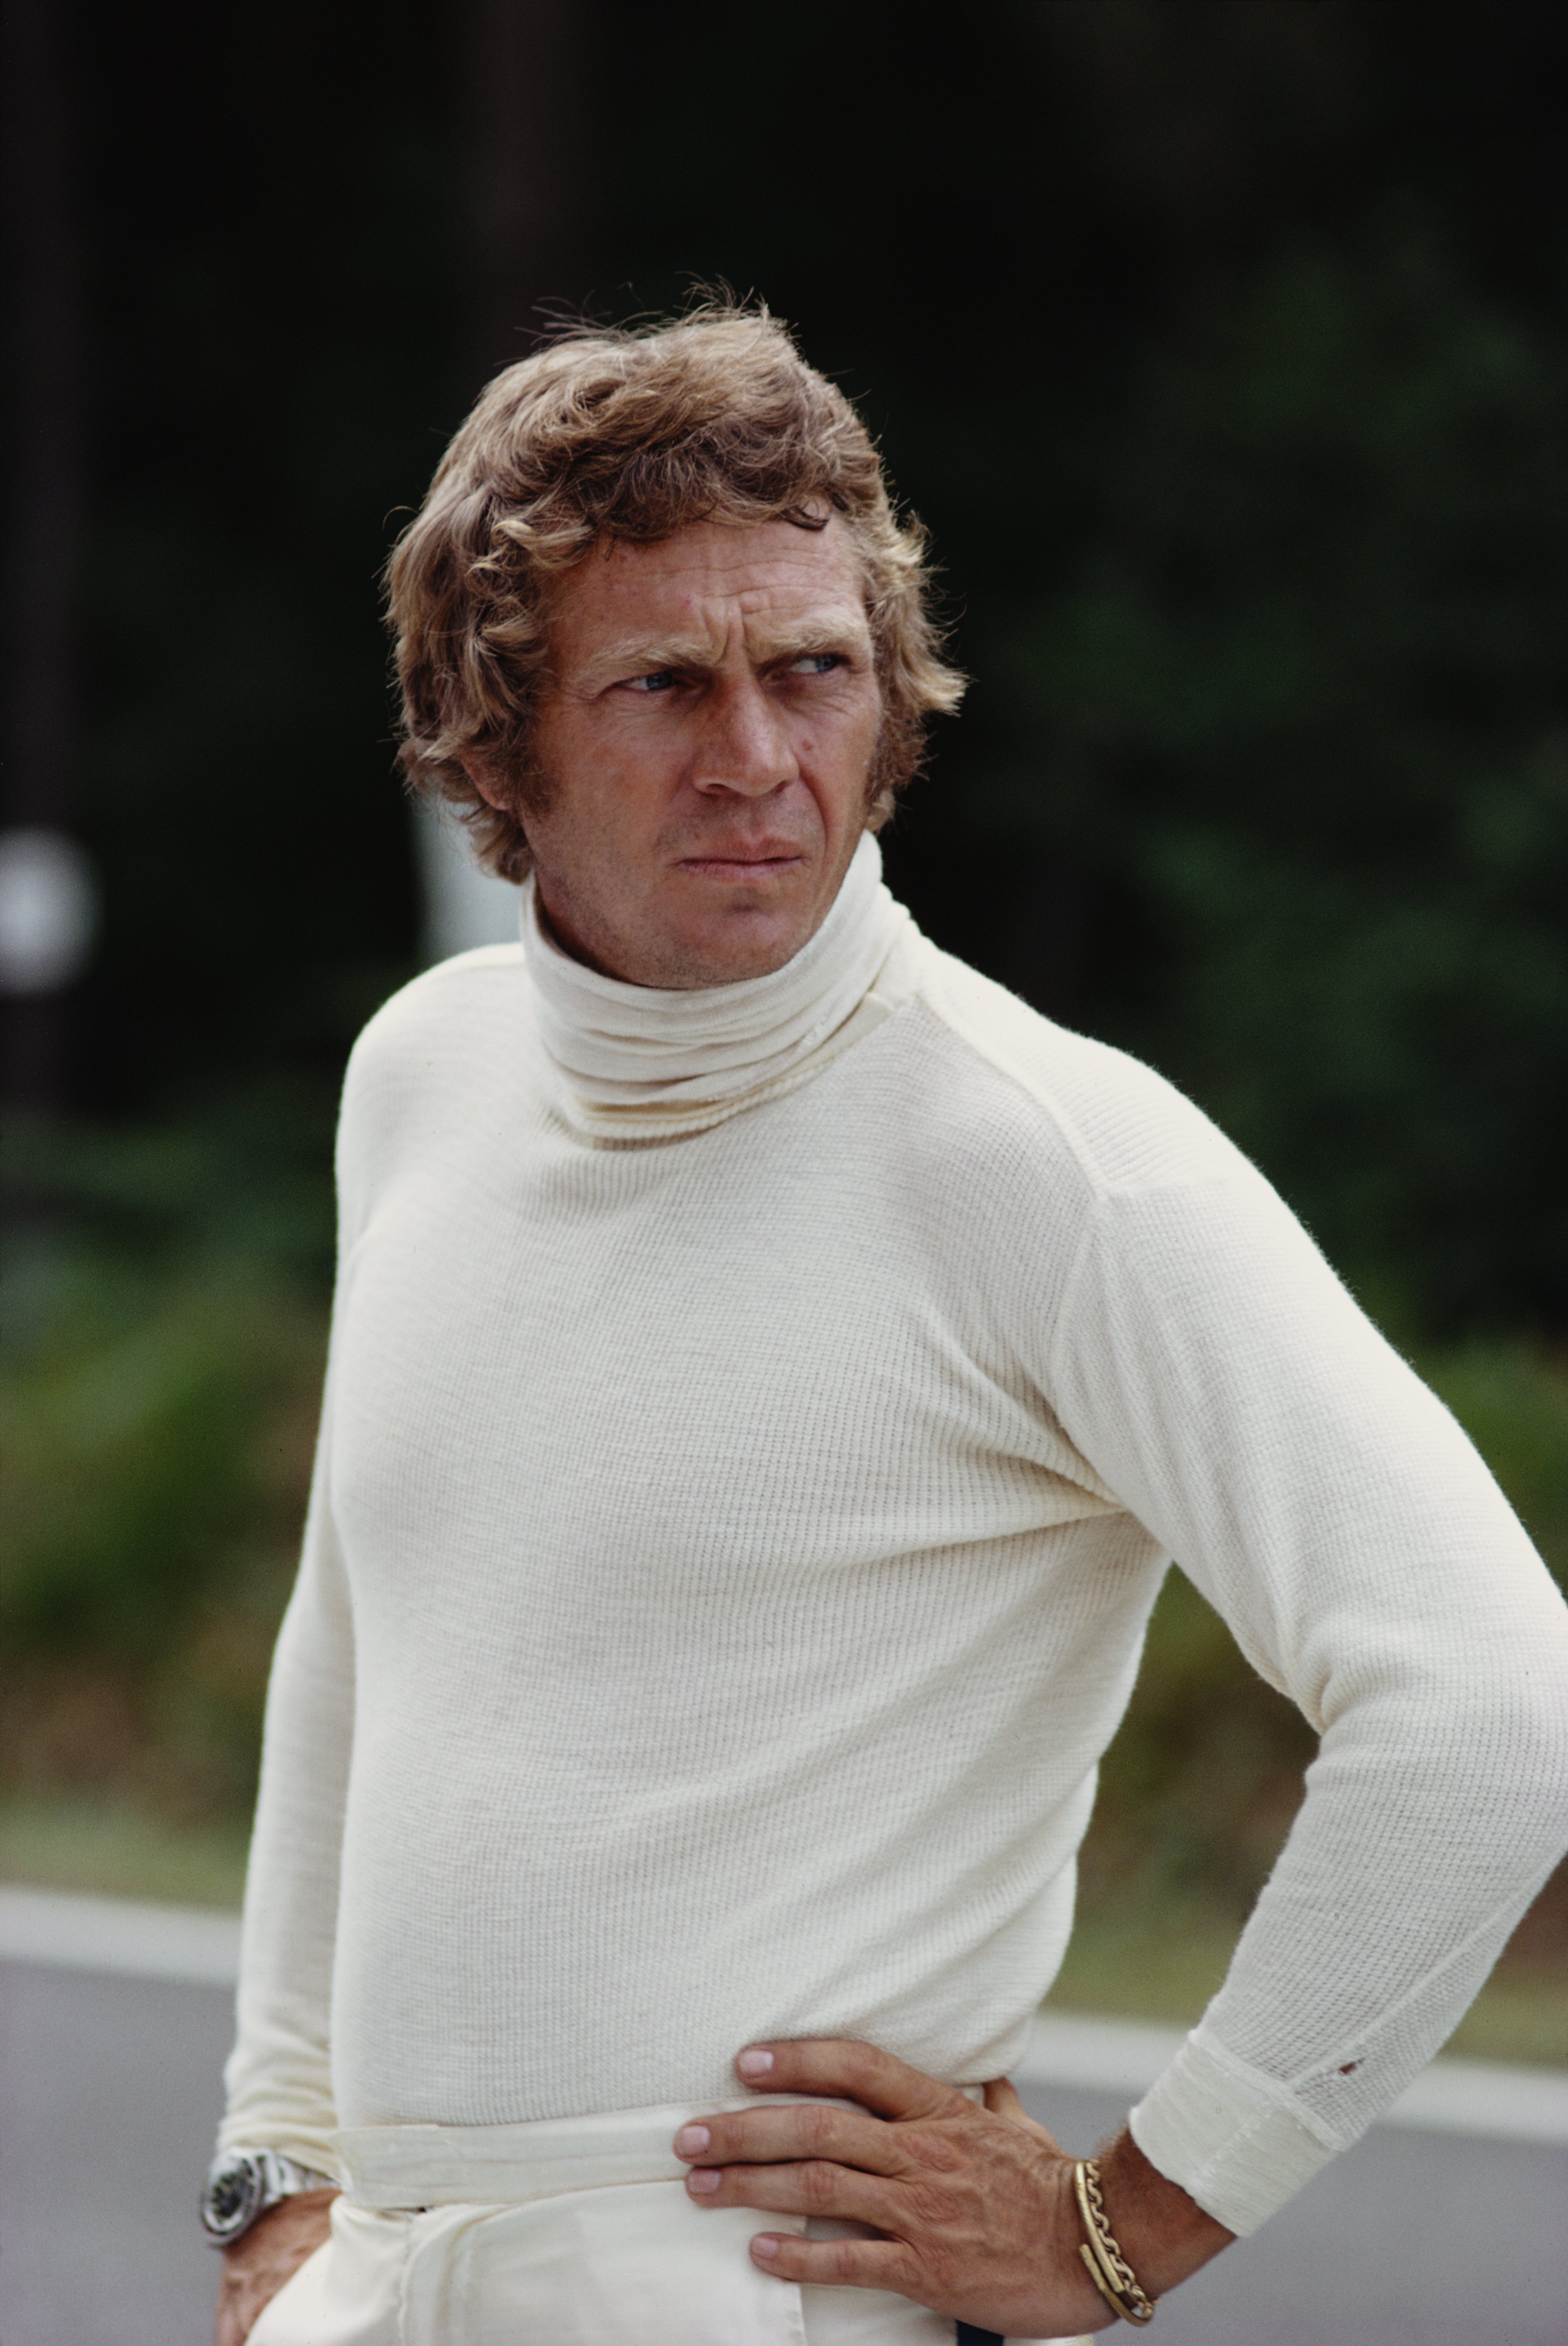 Steve McQueen in the film "La Mans" in 1971. | Source: Getty Images